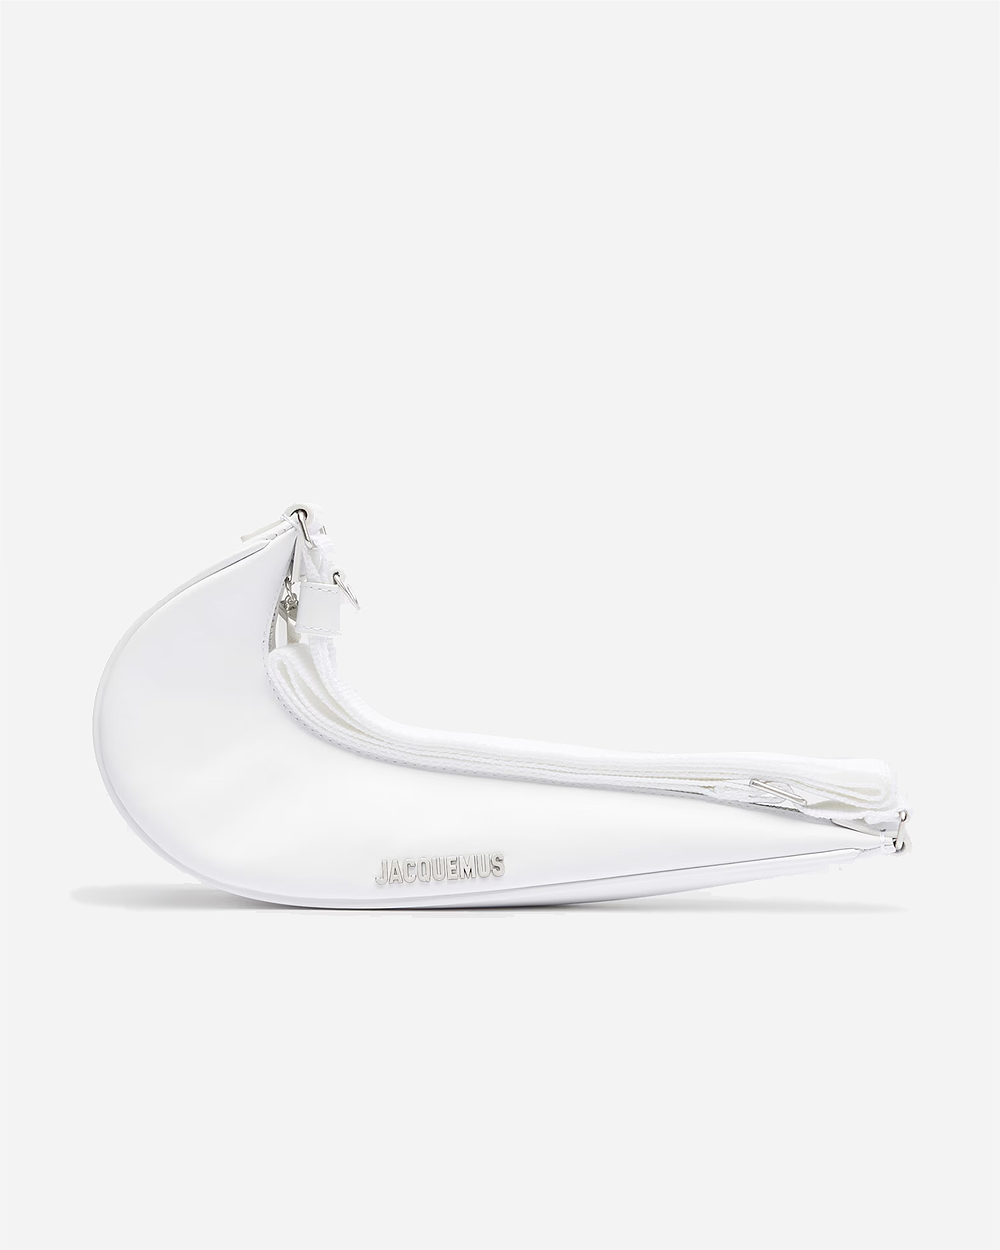 Jacquemus x Nike Swoosh Bag Midnight Navy/Shiny Silver DQ0324-410